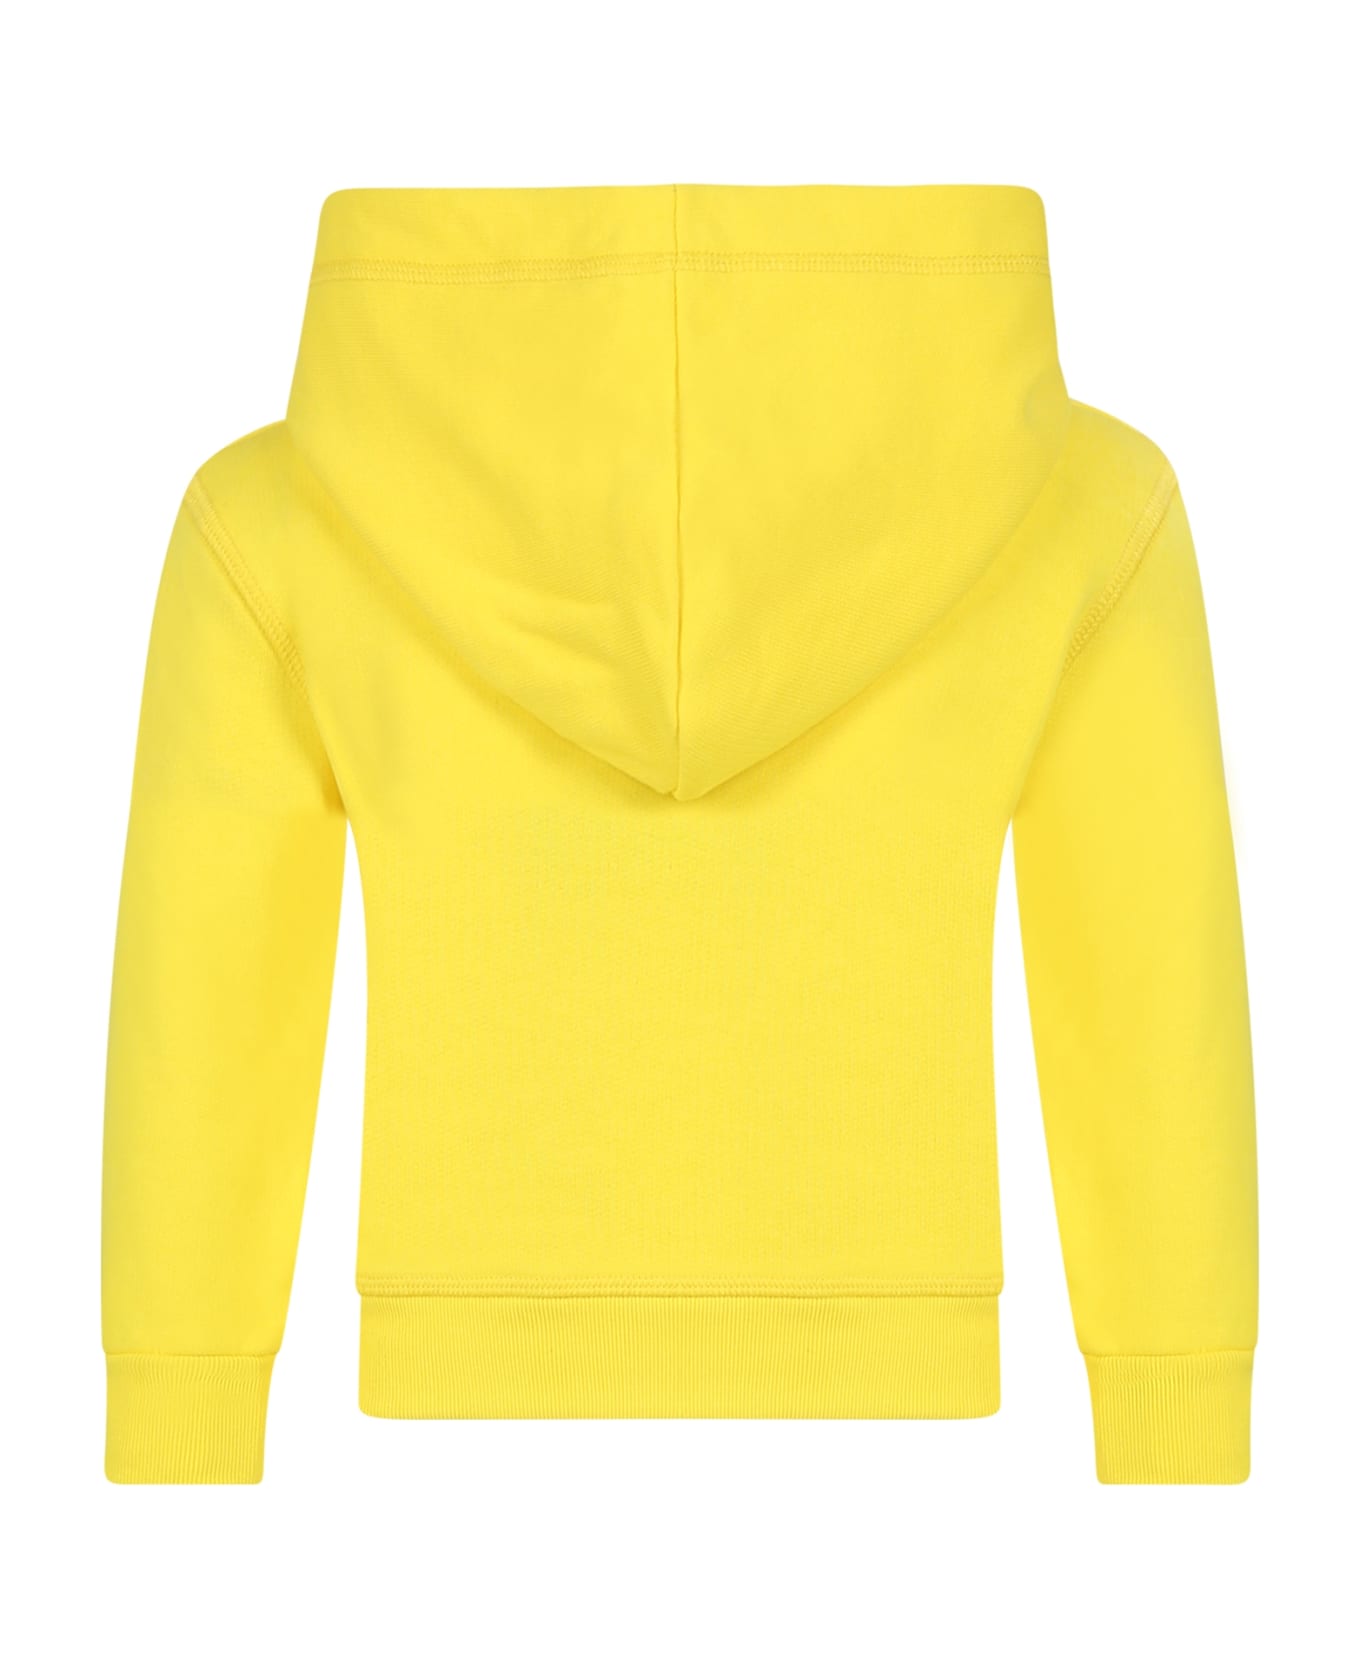 Dsquared2 Yellow Sweatshirt For Boy With Logo - Yellow